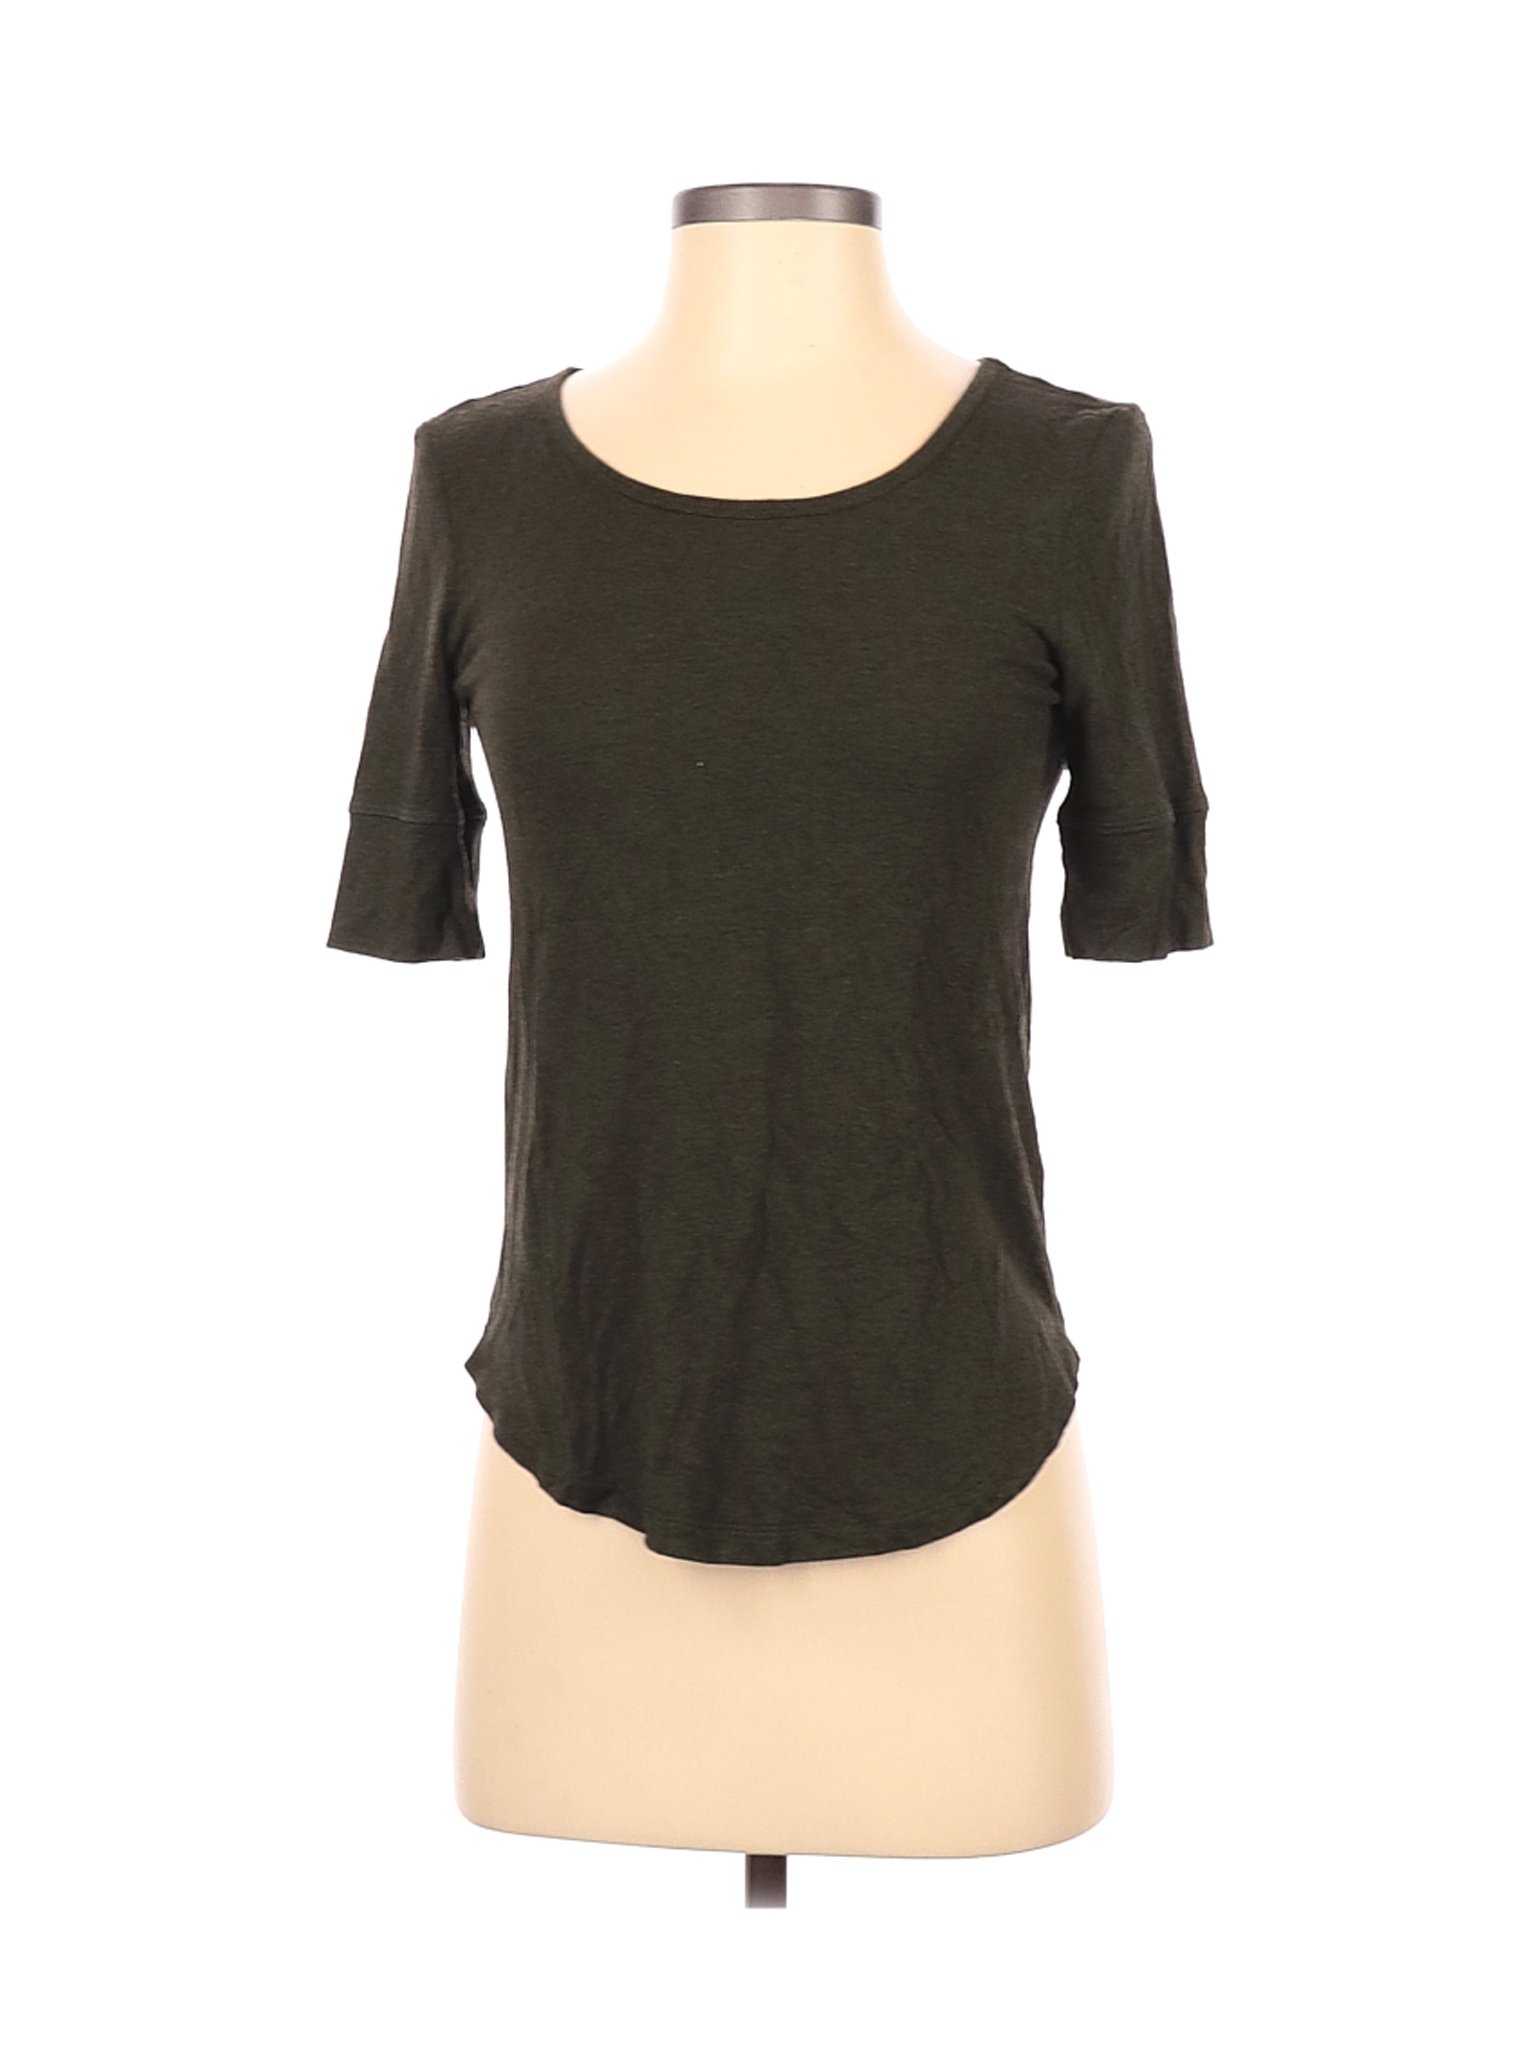 H&M Women Green 3/4 Sleeve T-Shirt XS | eBay